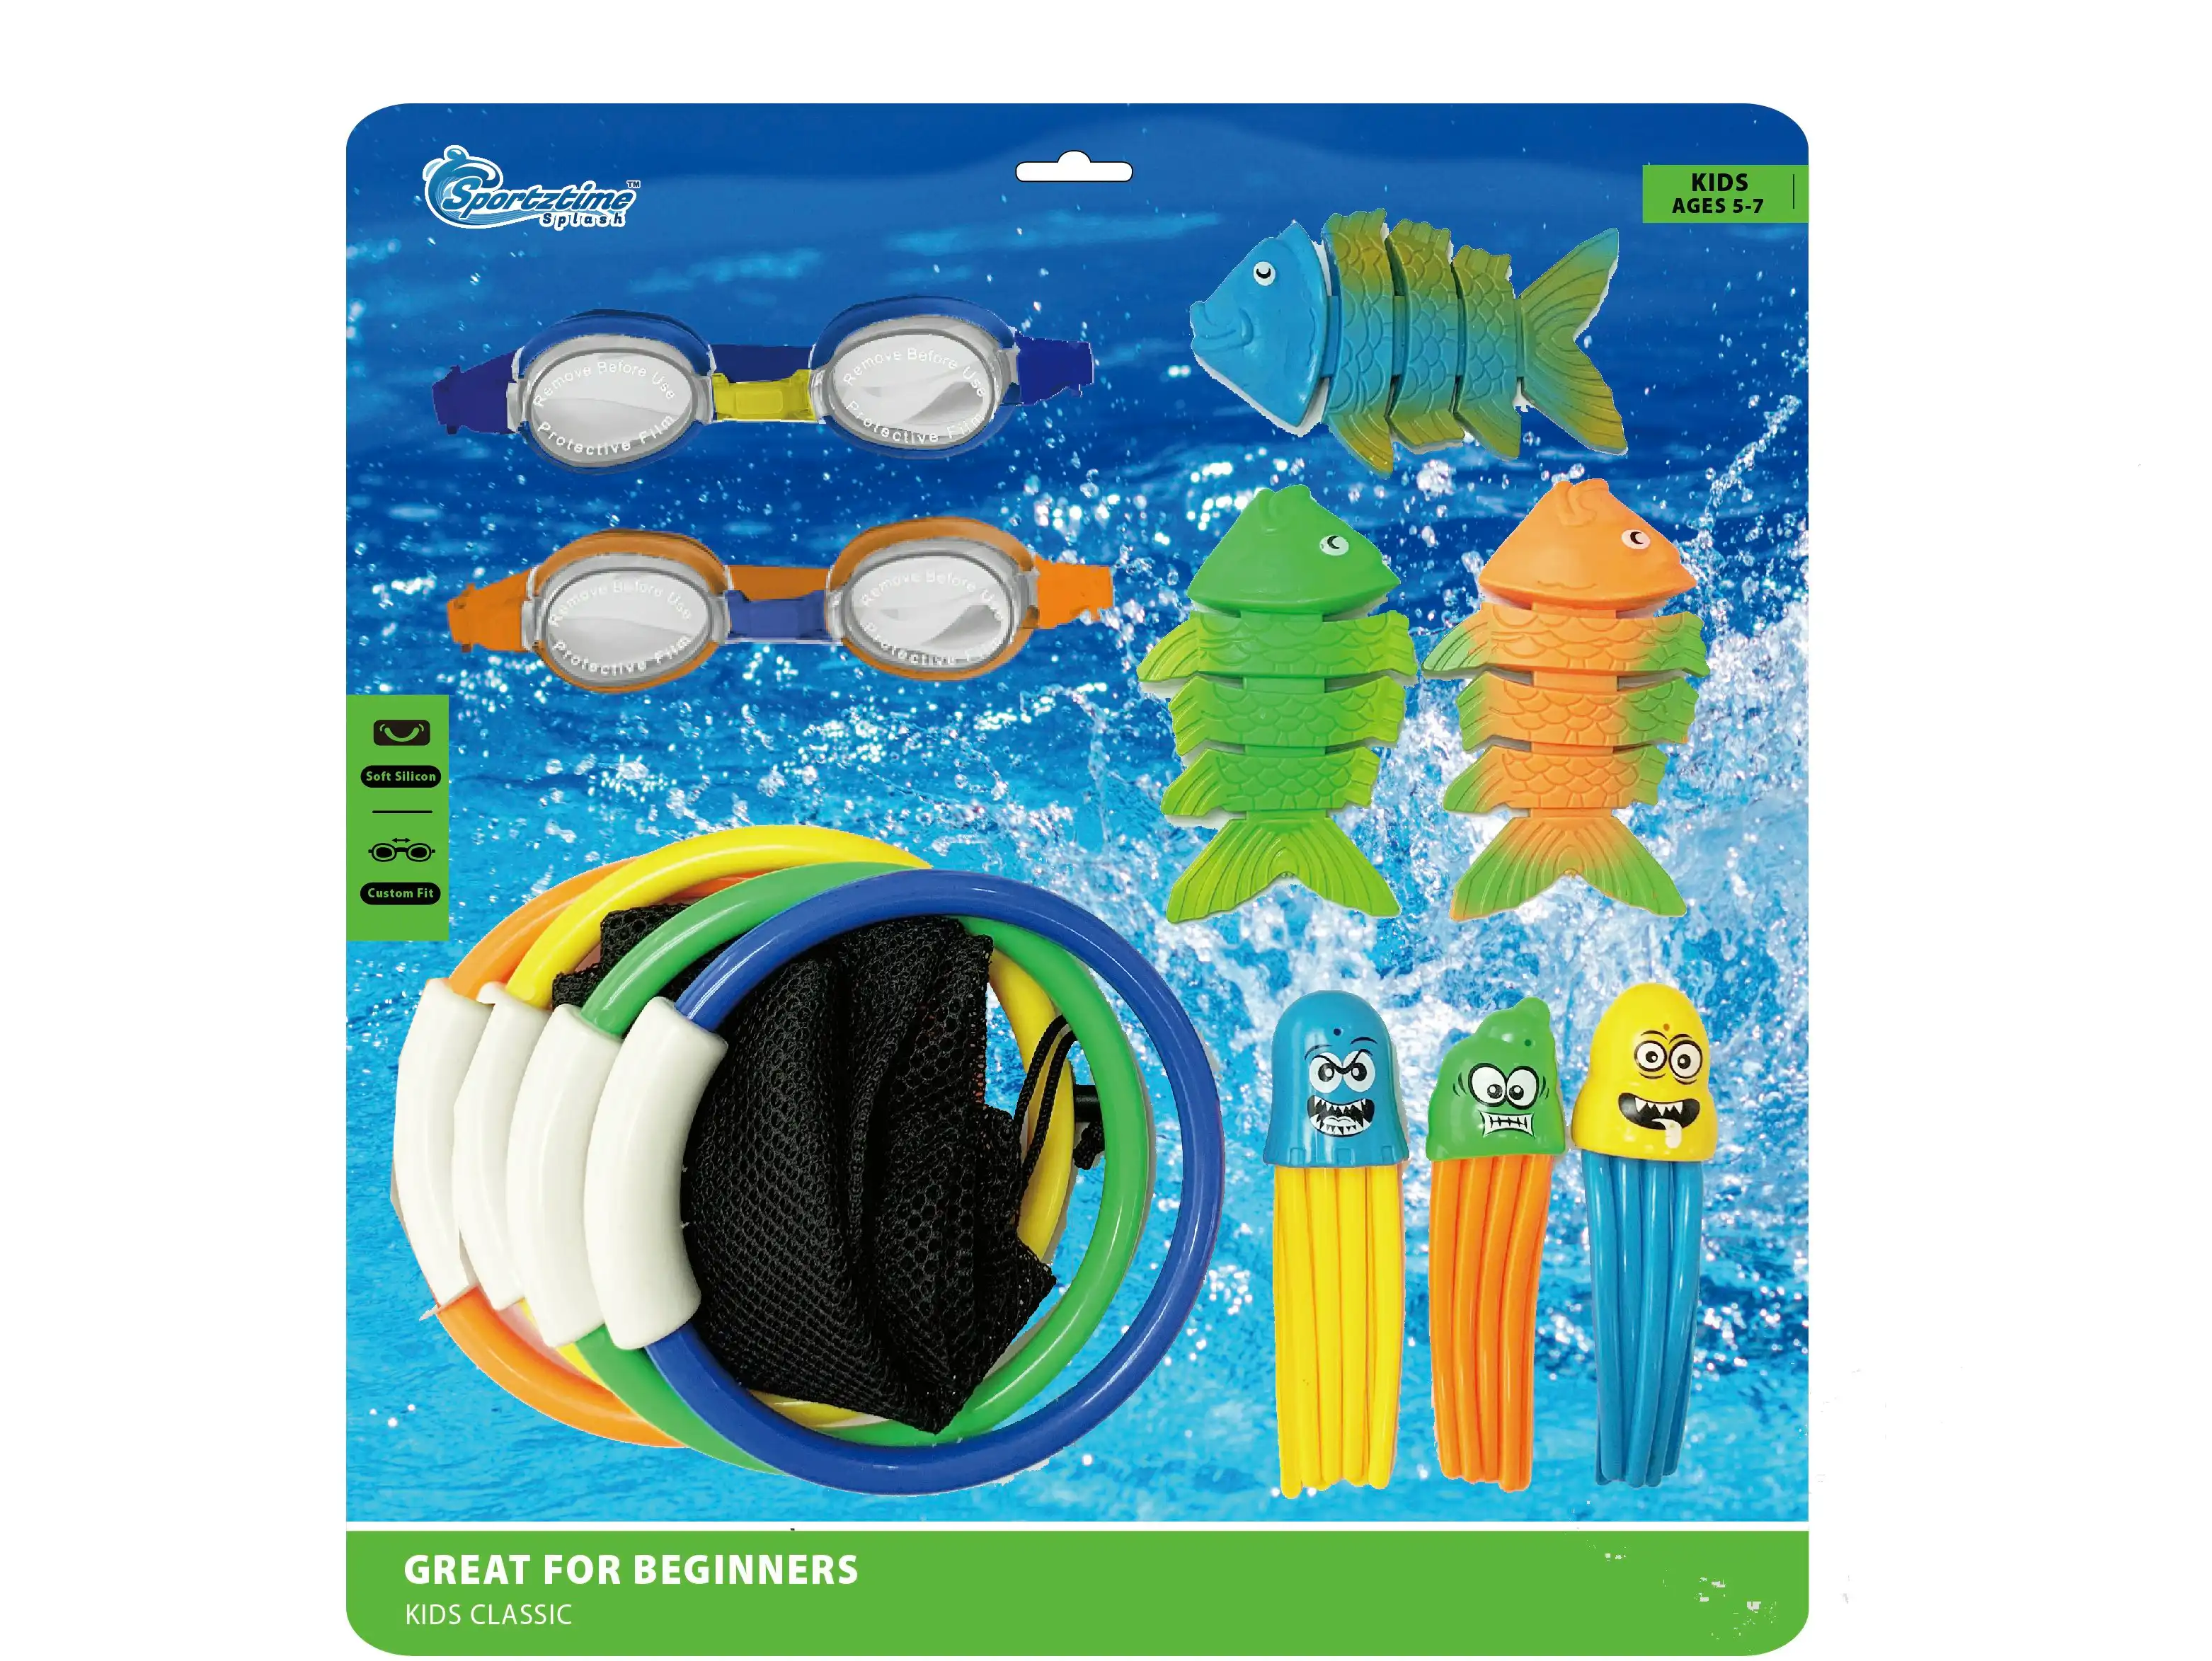 The Deep Sea Sporztime Swim Pack